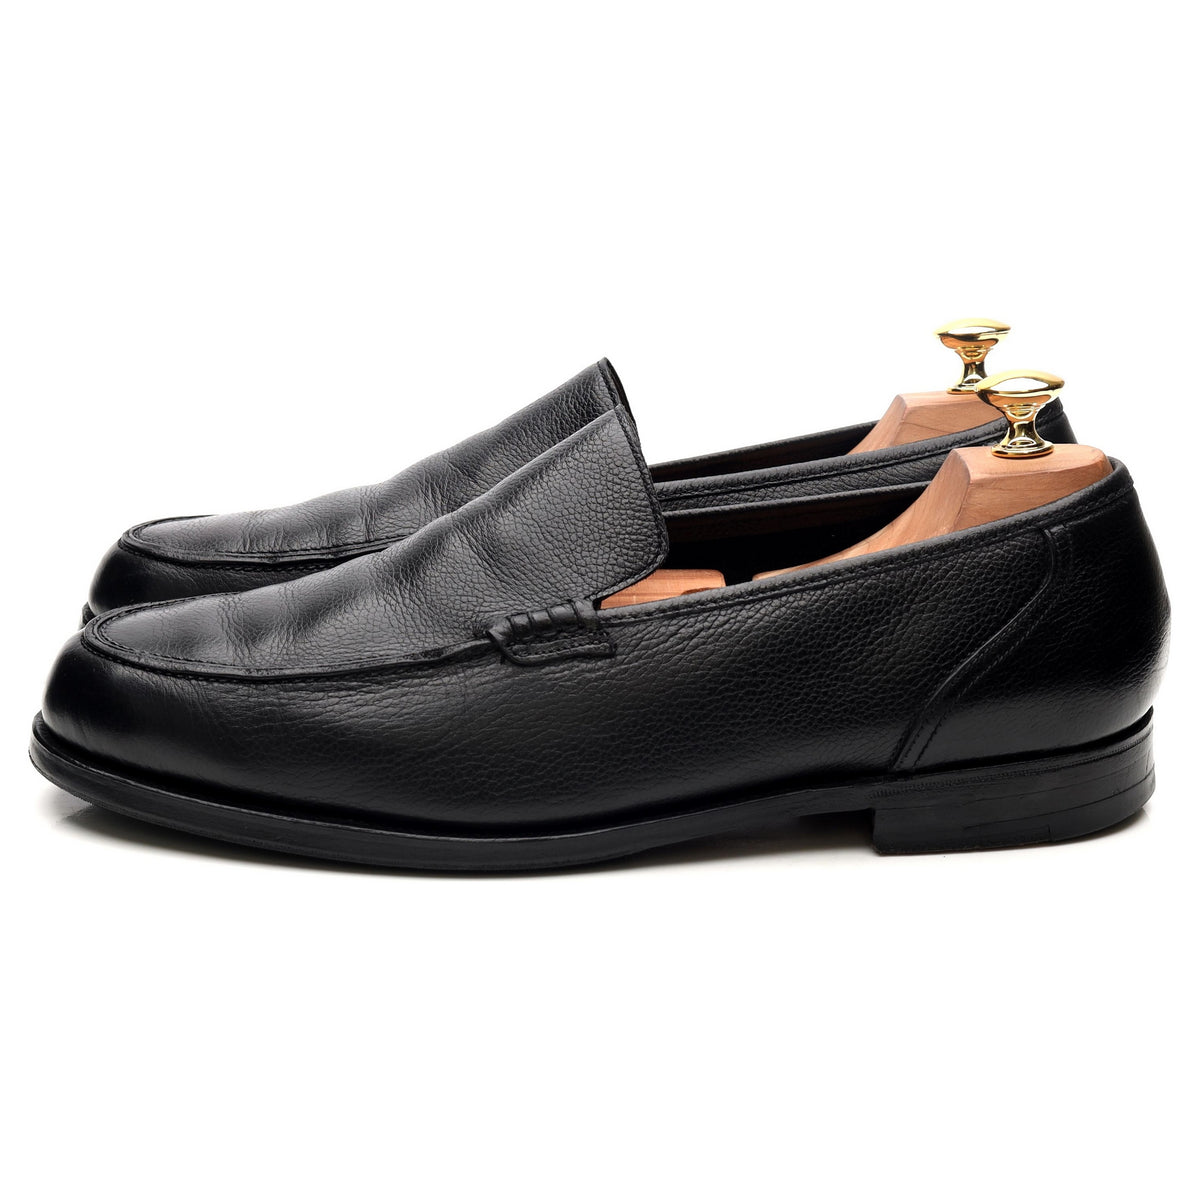 Black Leather Loafers UK 11 E